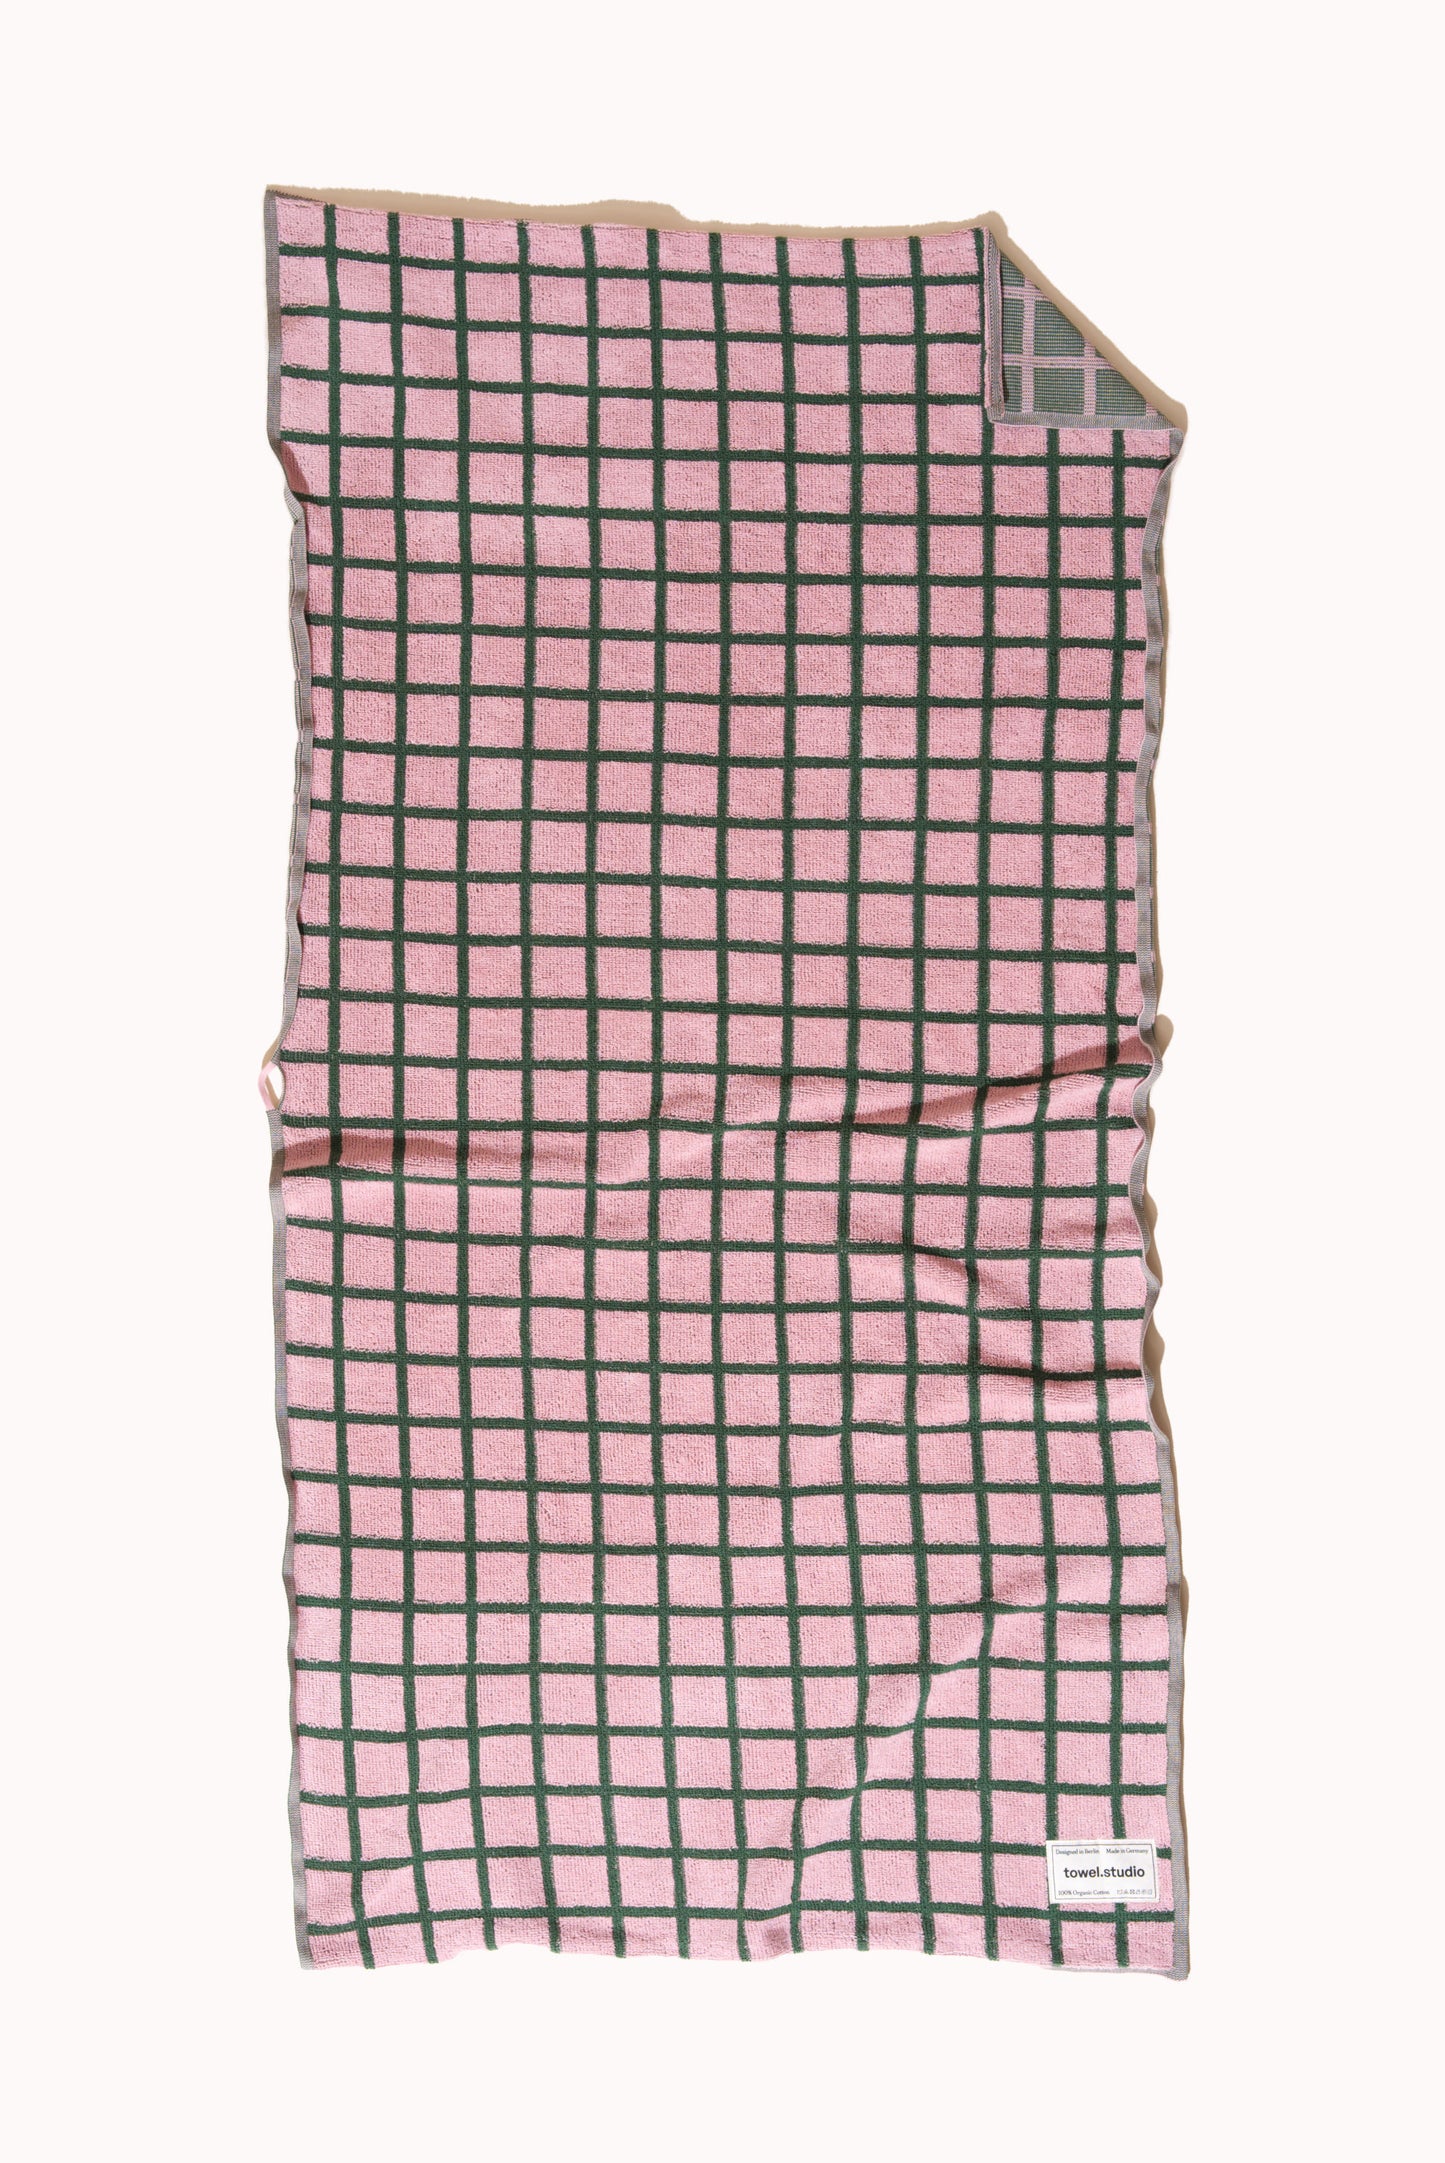 Tiles Bath Towel | Pink & Green